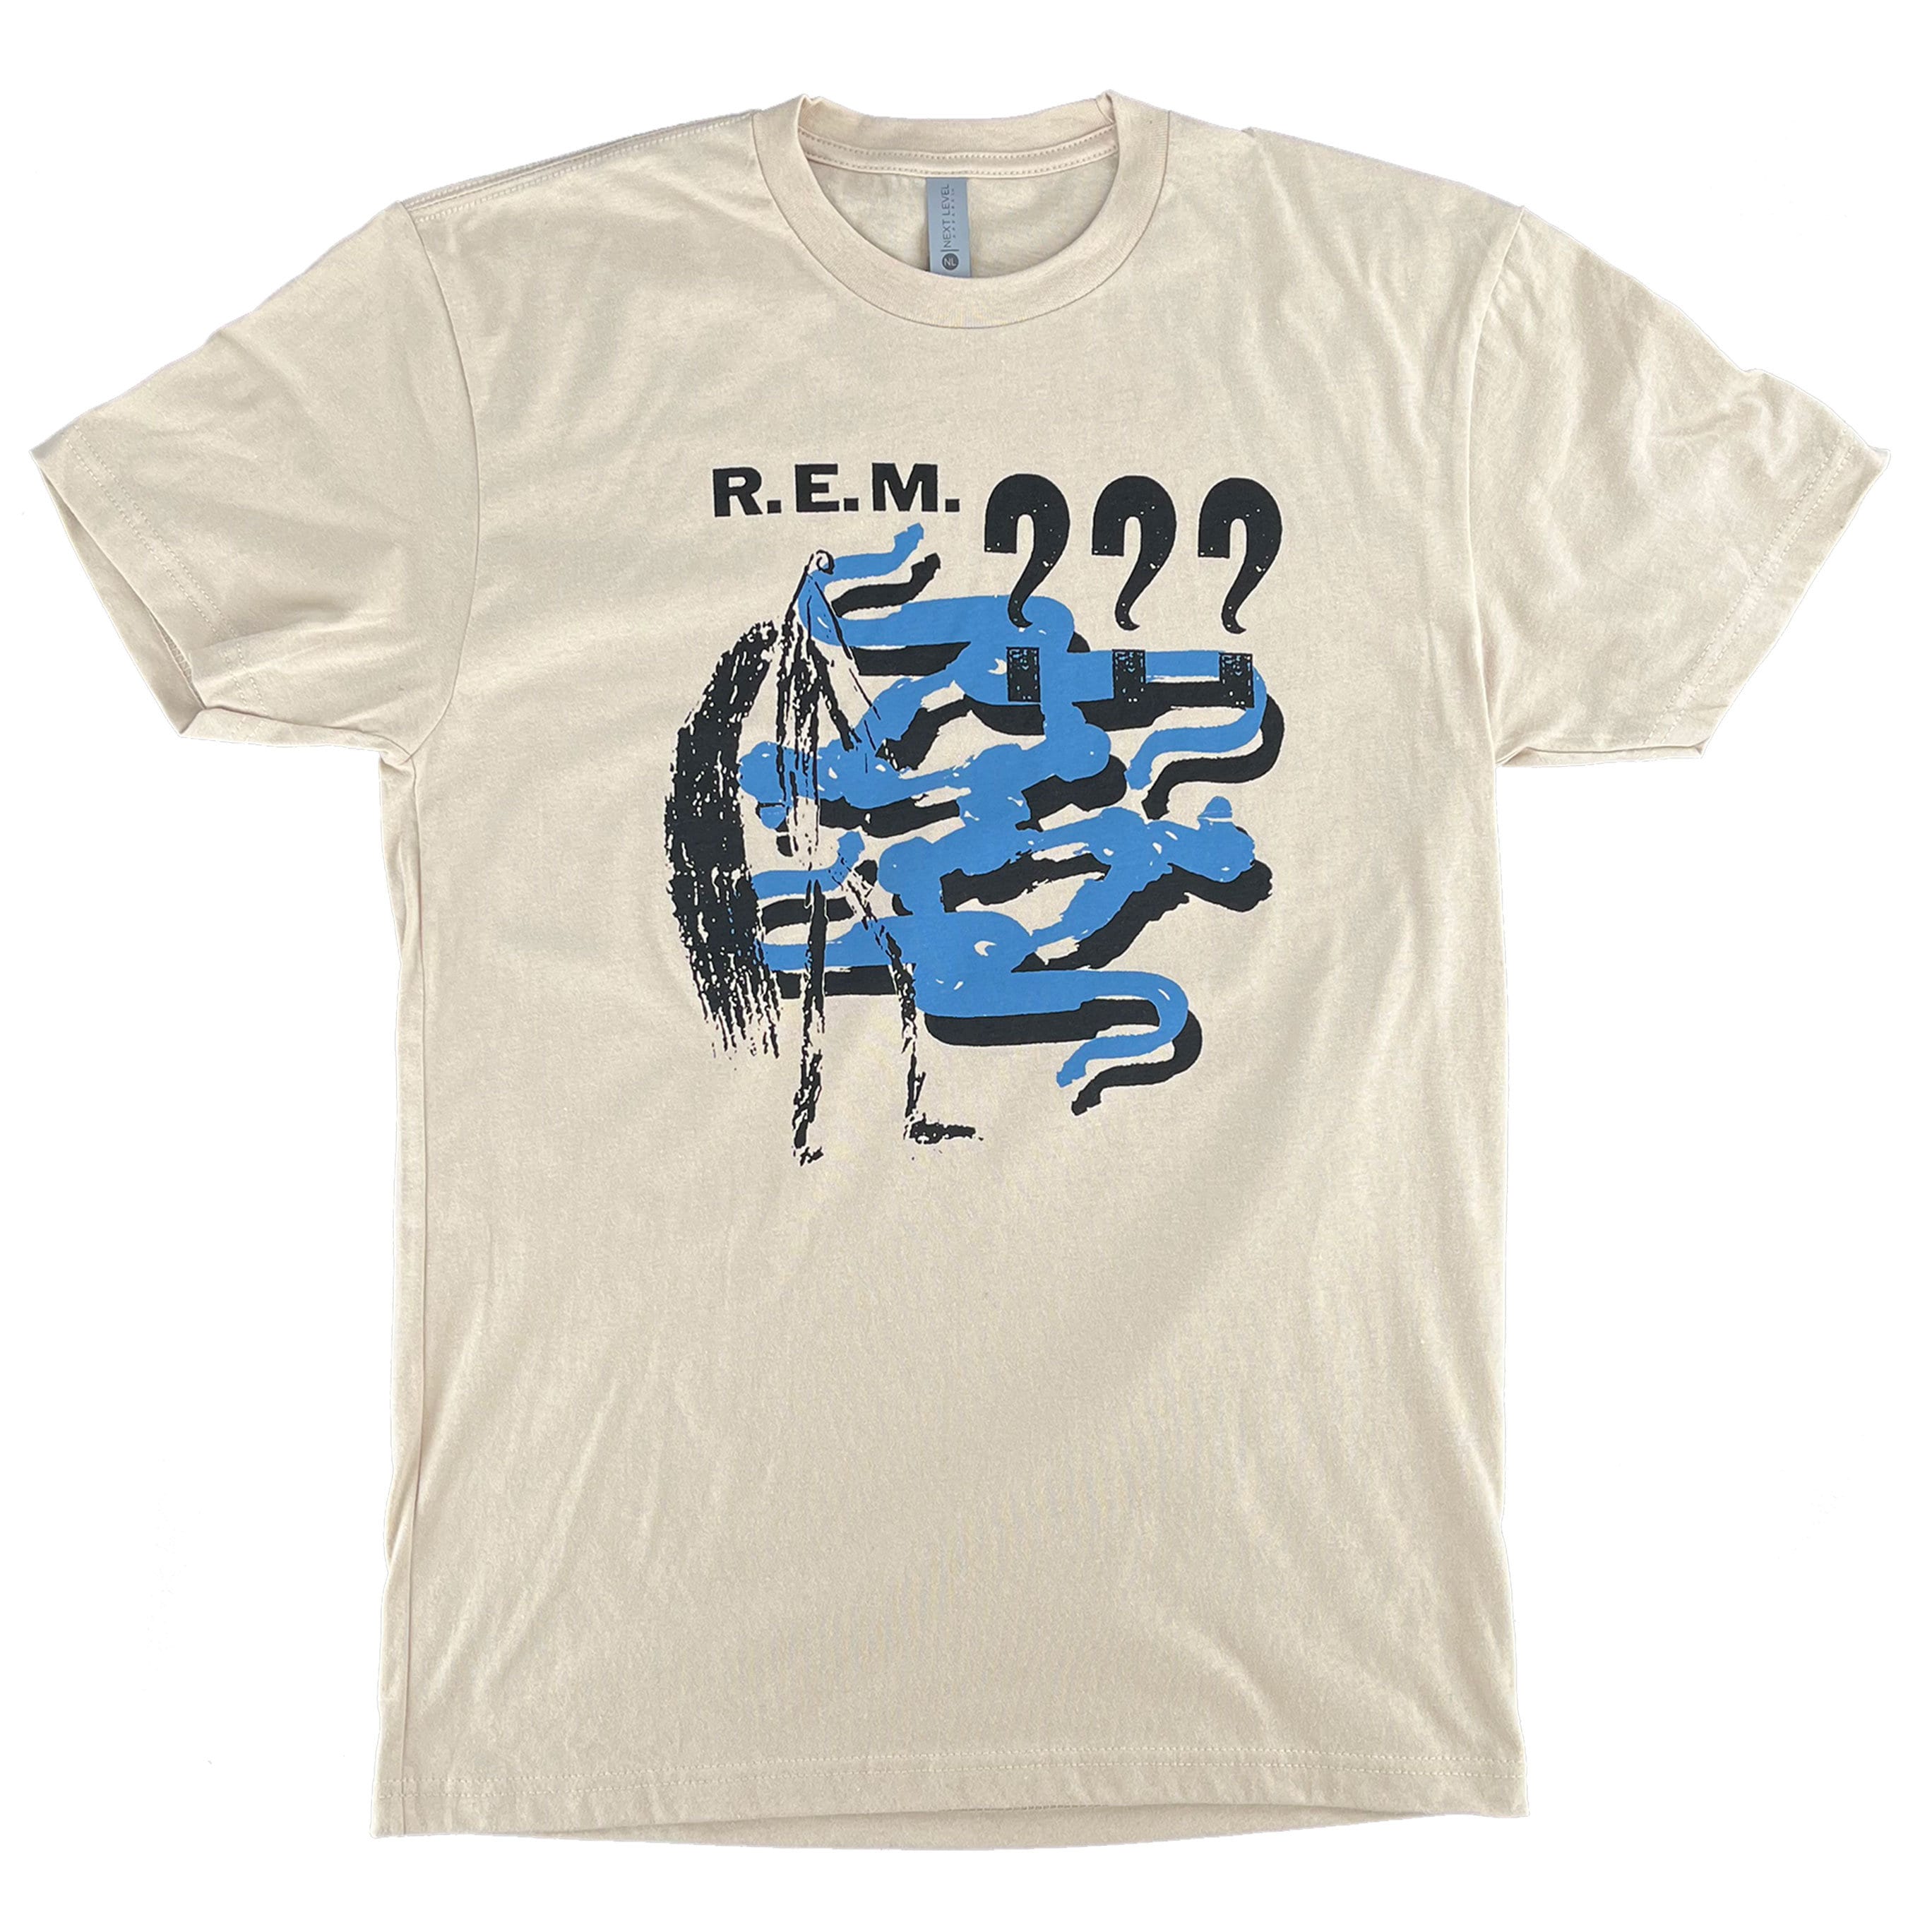 R.E.M. Band Shirt